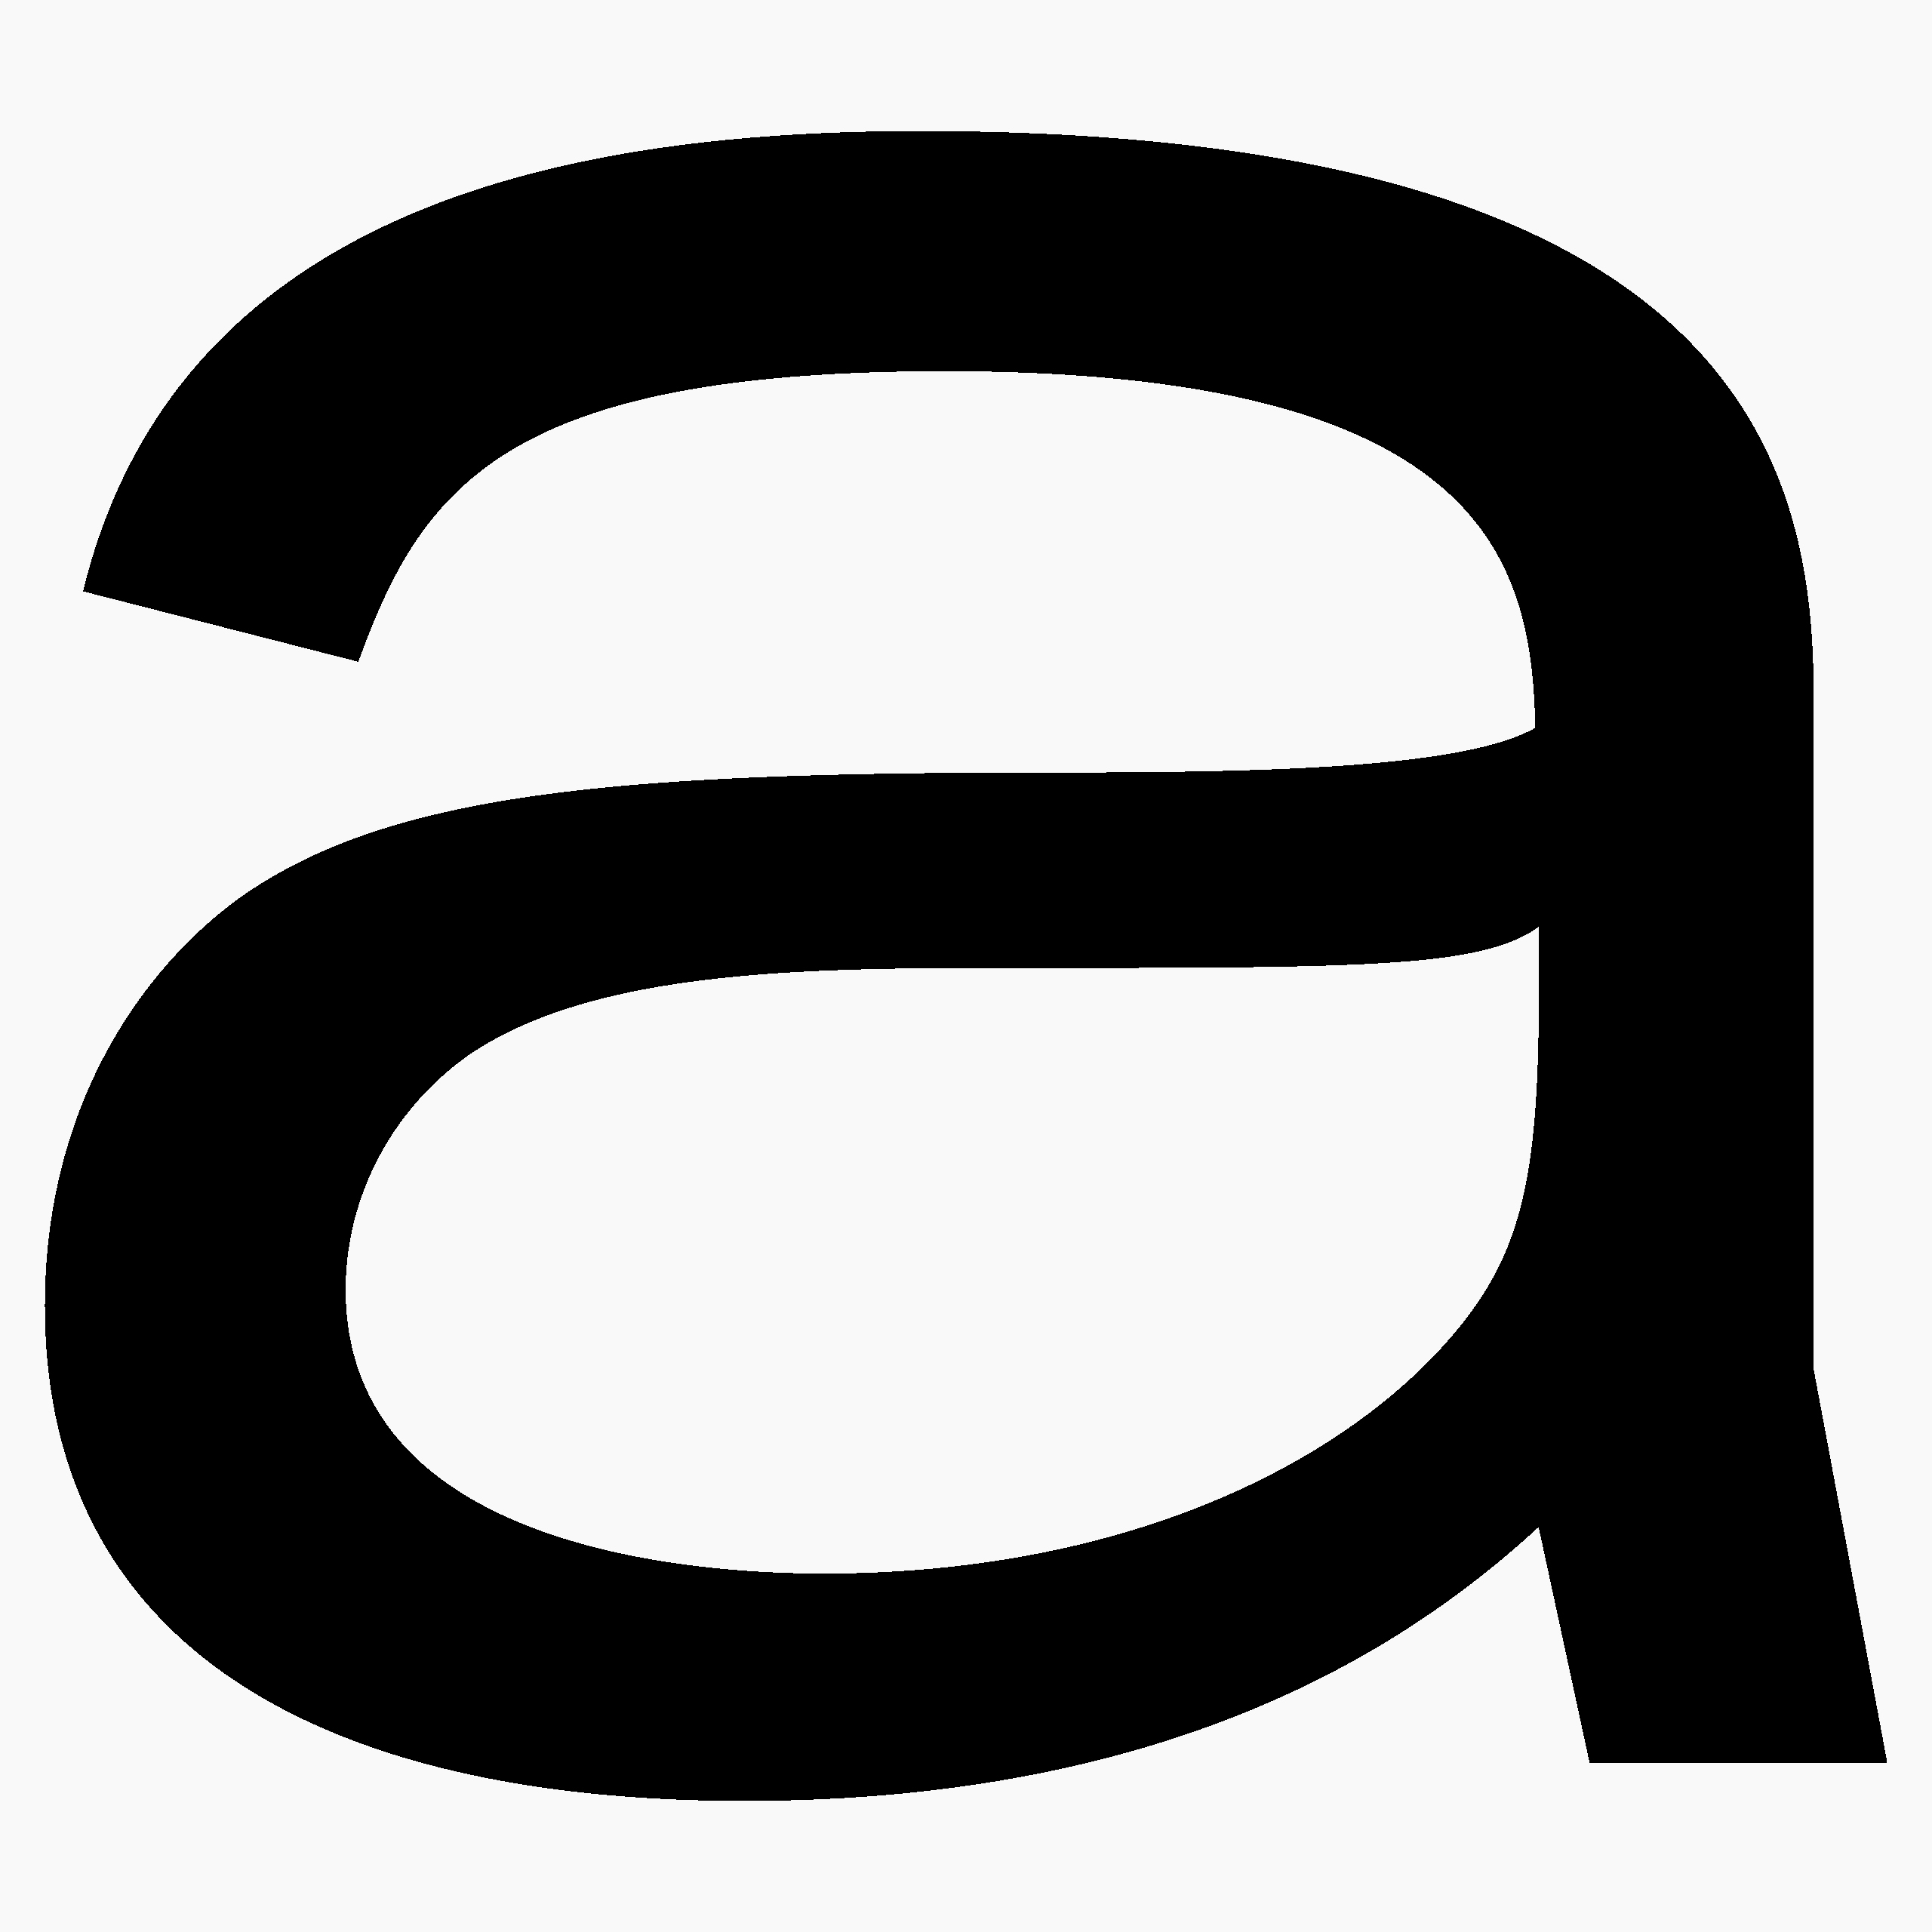 Daniel-Stuhlpfarrer_typedesign_graphicdesign_custom-font_custom-typeface_typography_Kritik_2